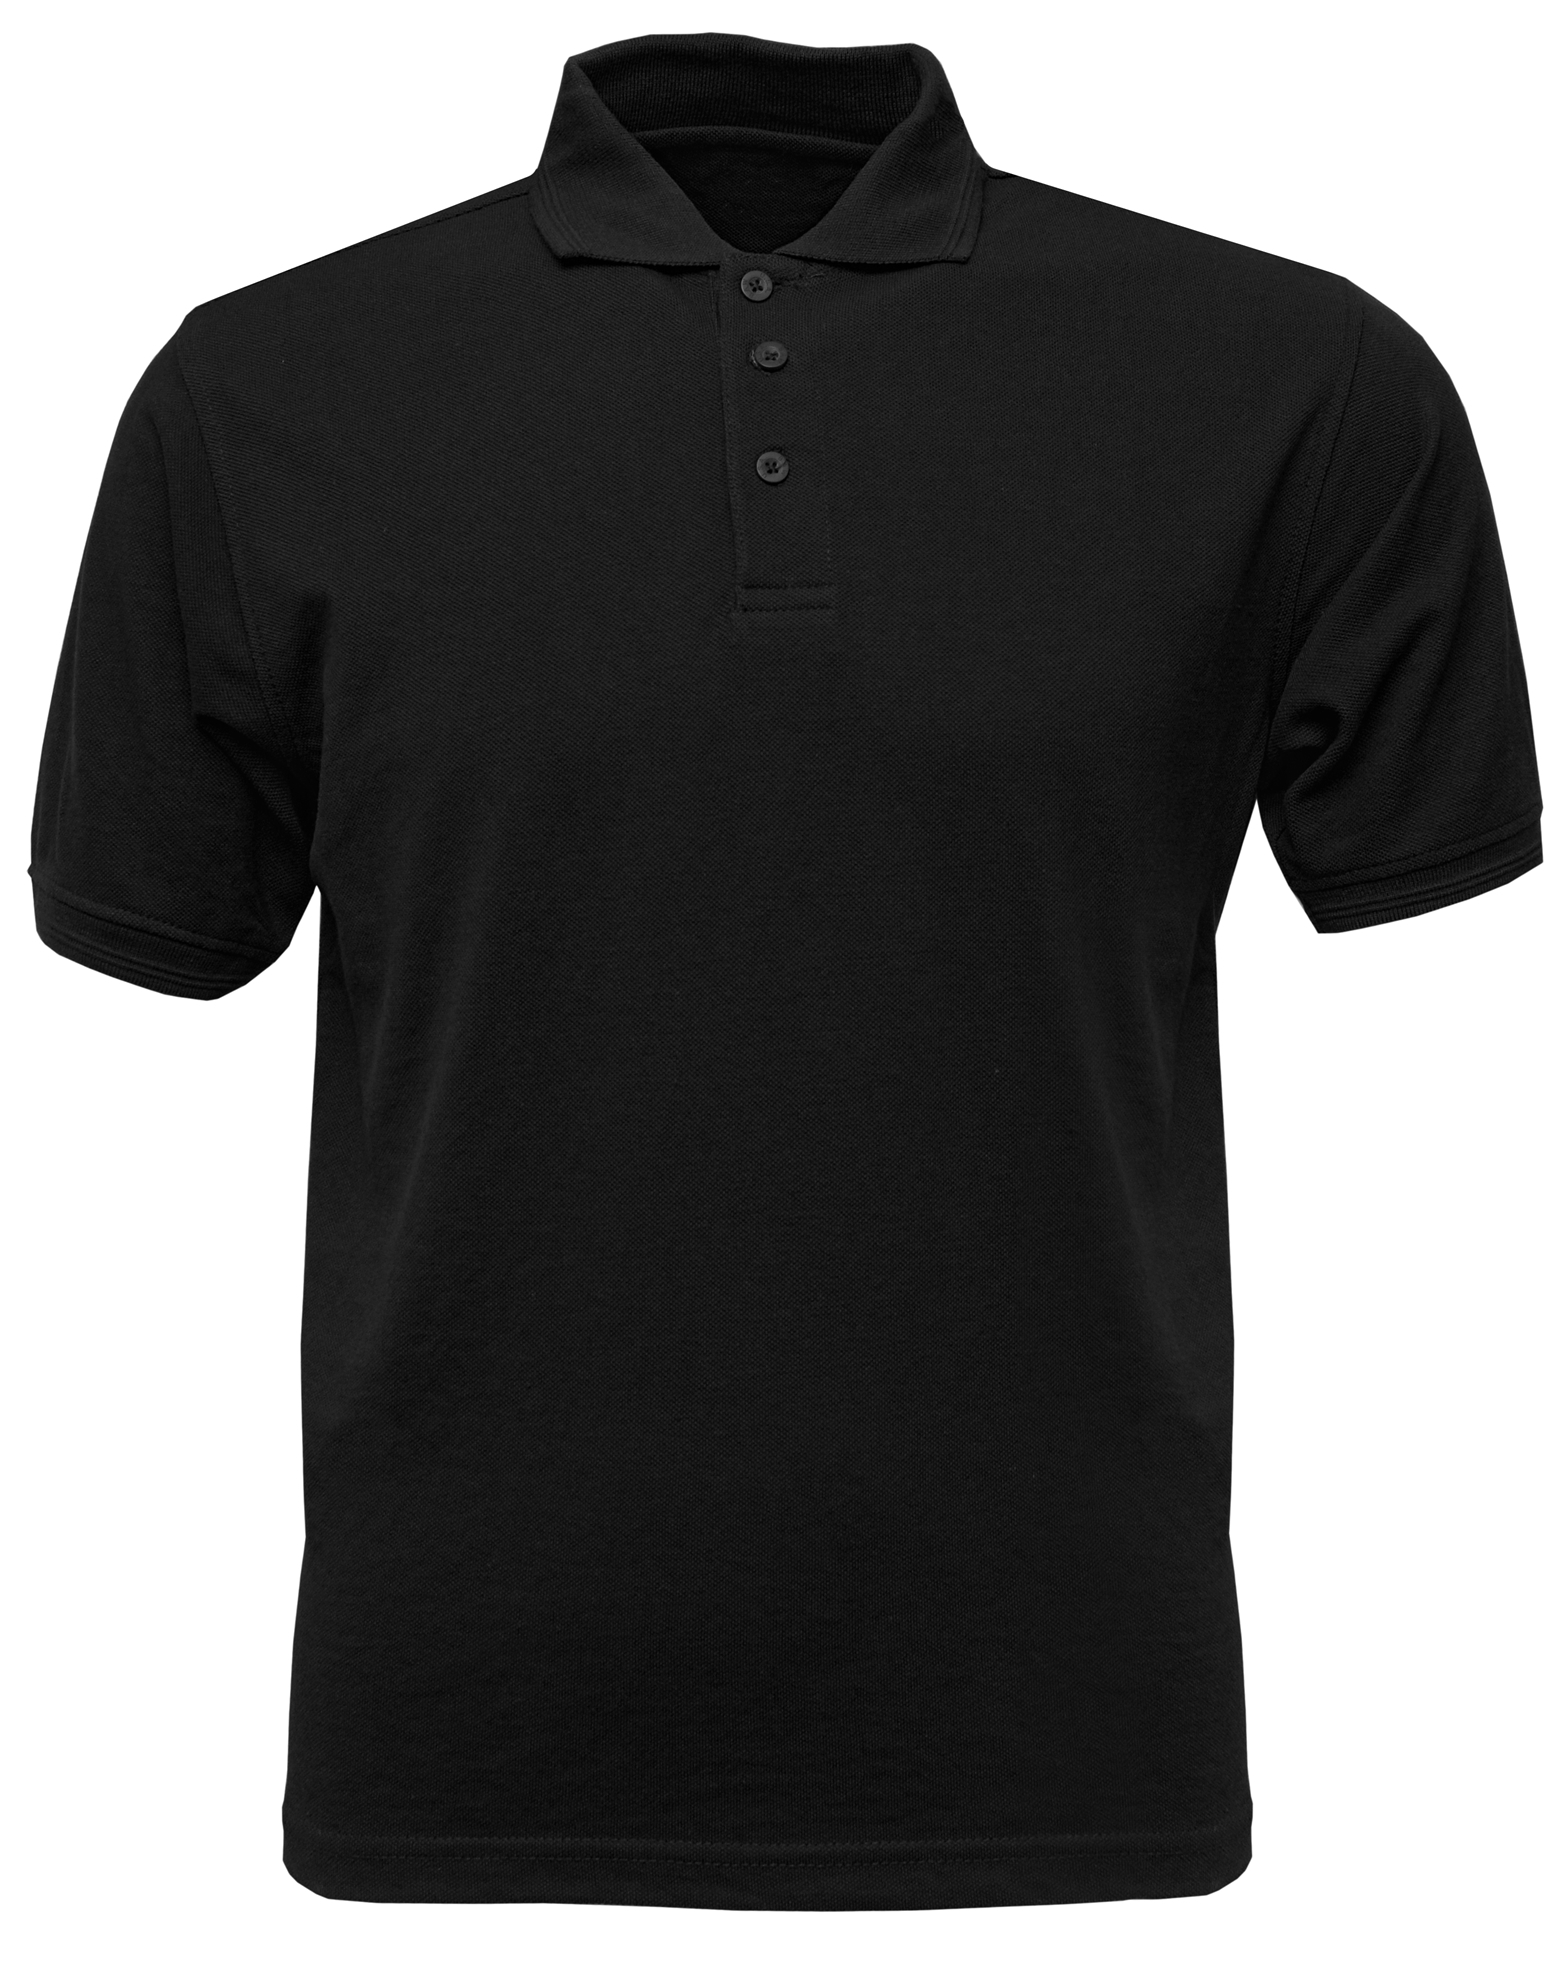 BAW Athletic Wear ED365 - Men's Everyday Polo Short Sleeve